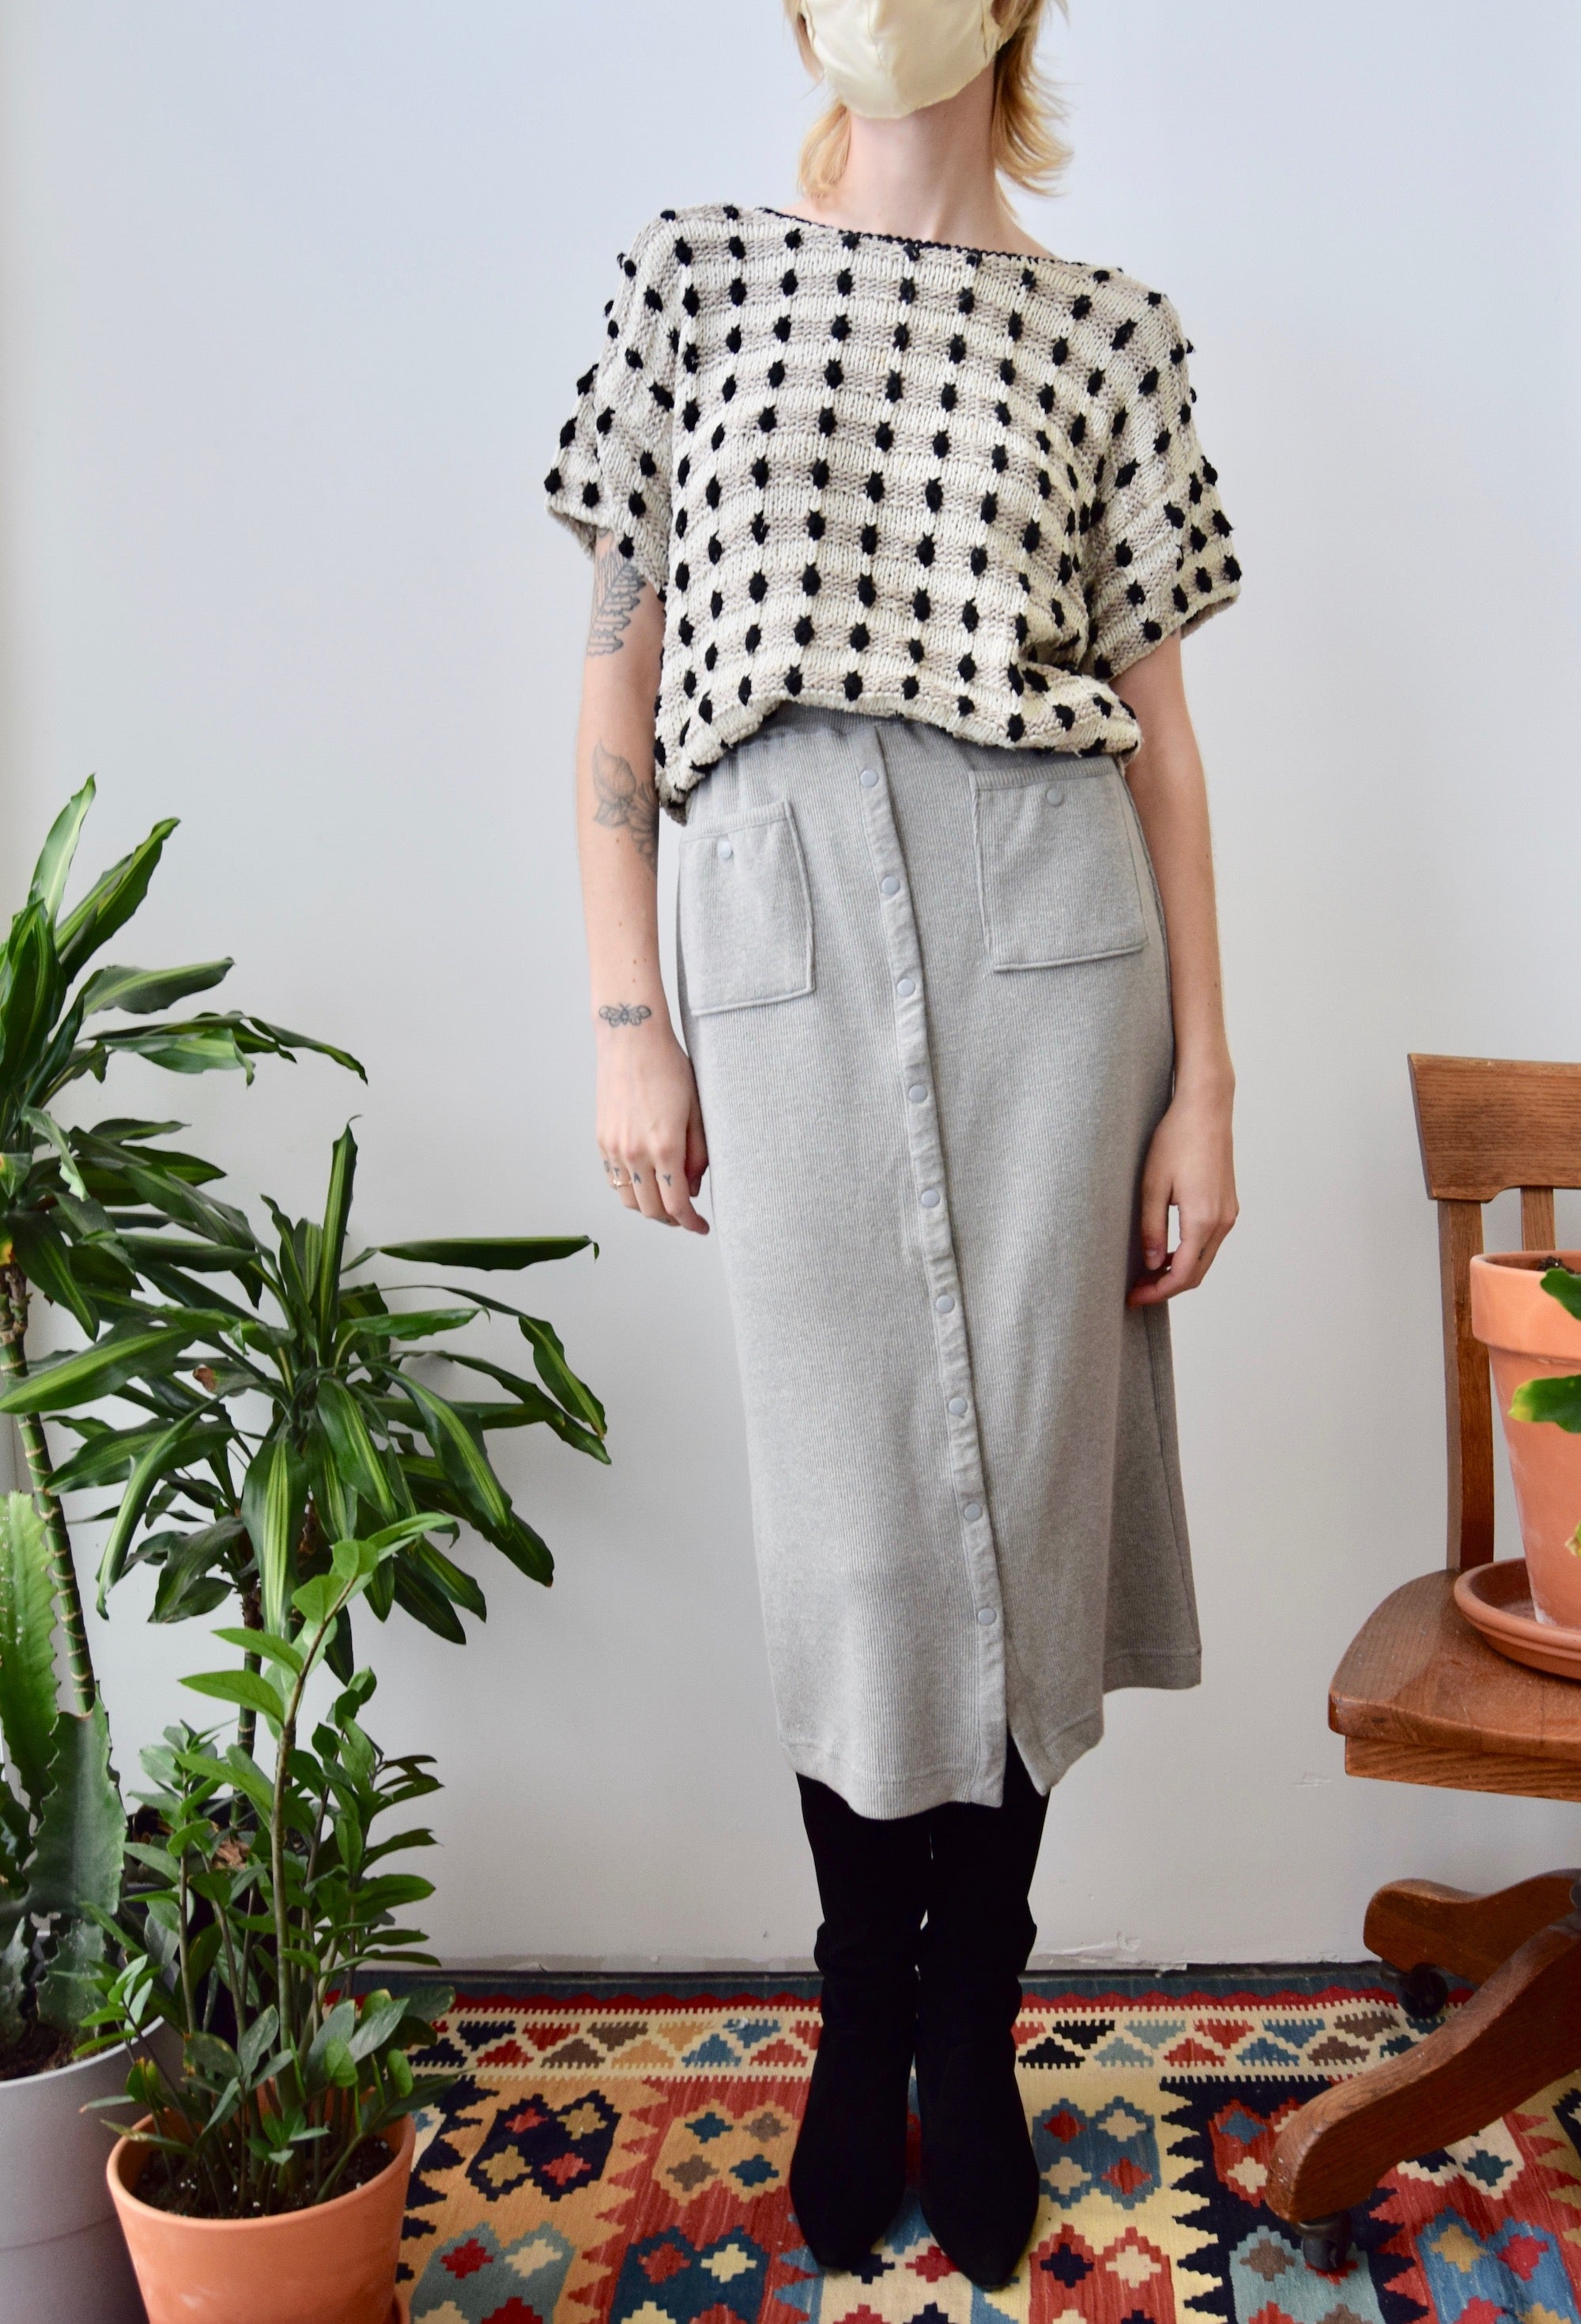 Heather Grey Knit Skirt